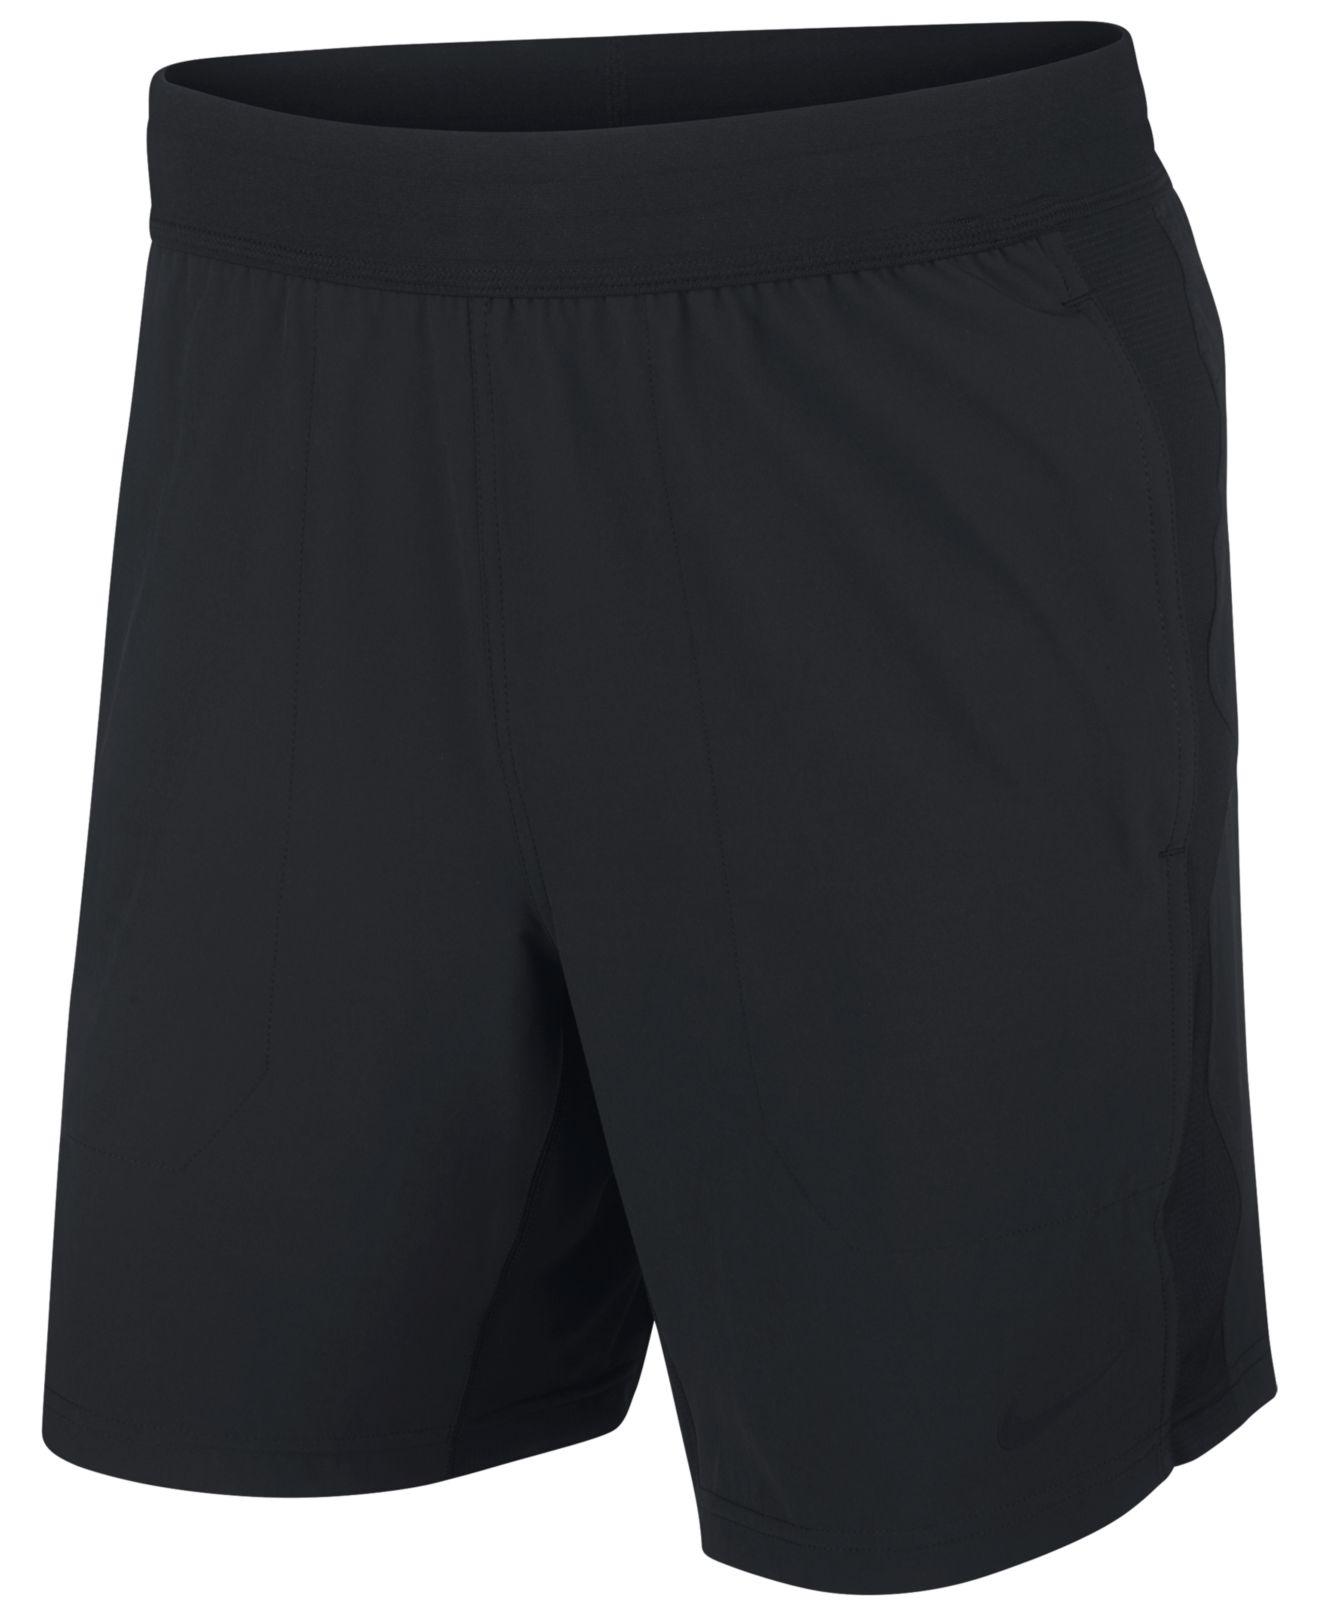 Nike Synthetic Flex Yoga Shorts in Black for Men - Lyst